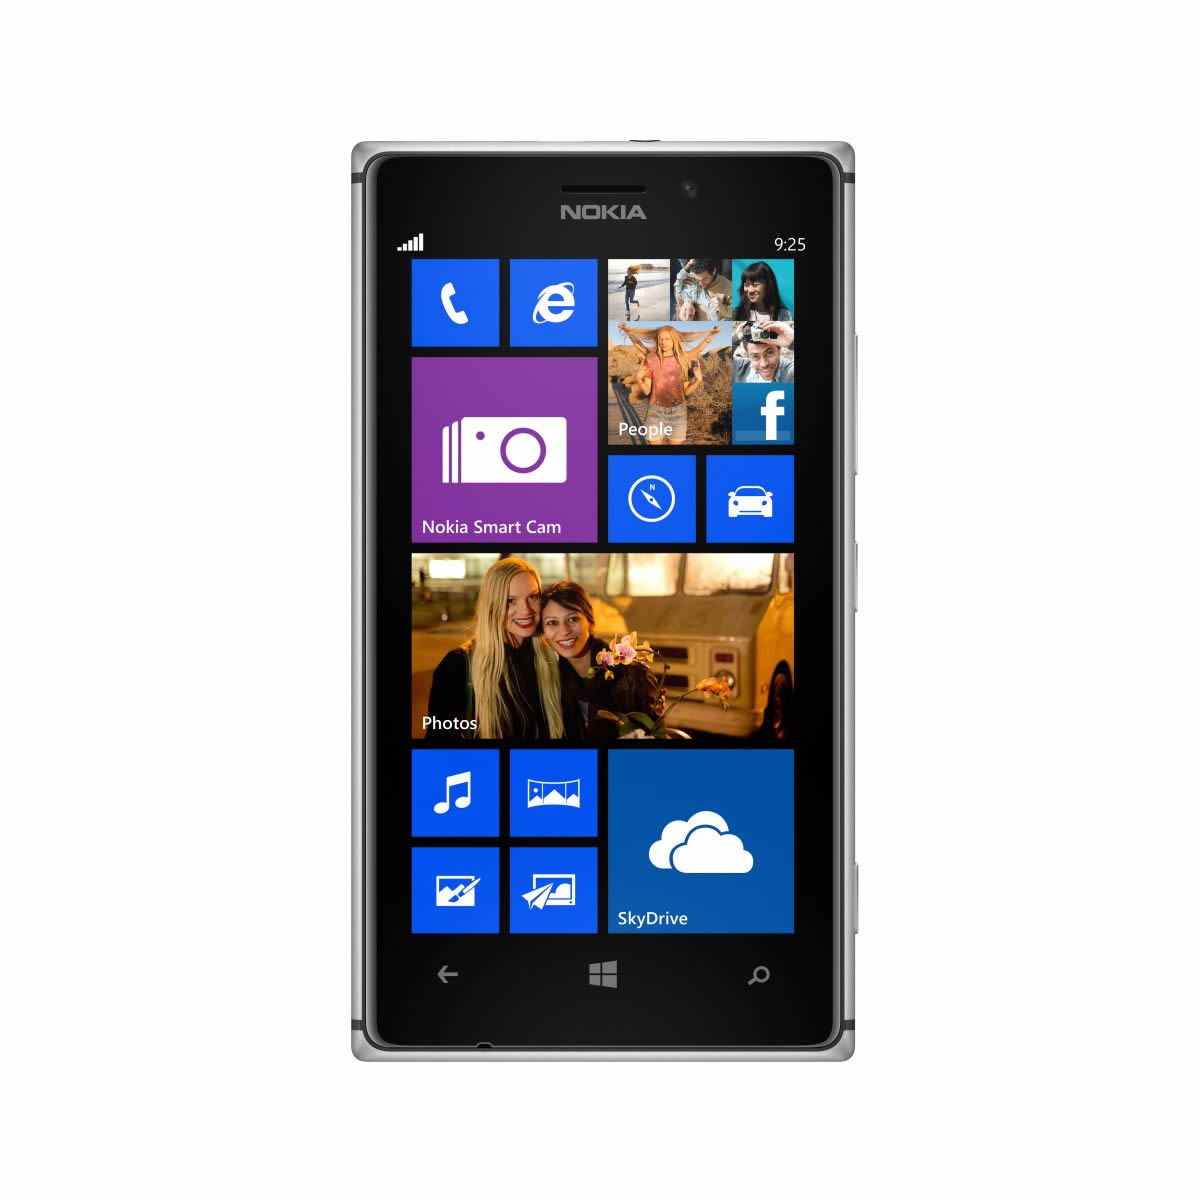 Технические характеристики и фотографии Nokia Lumia 925